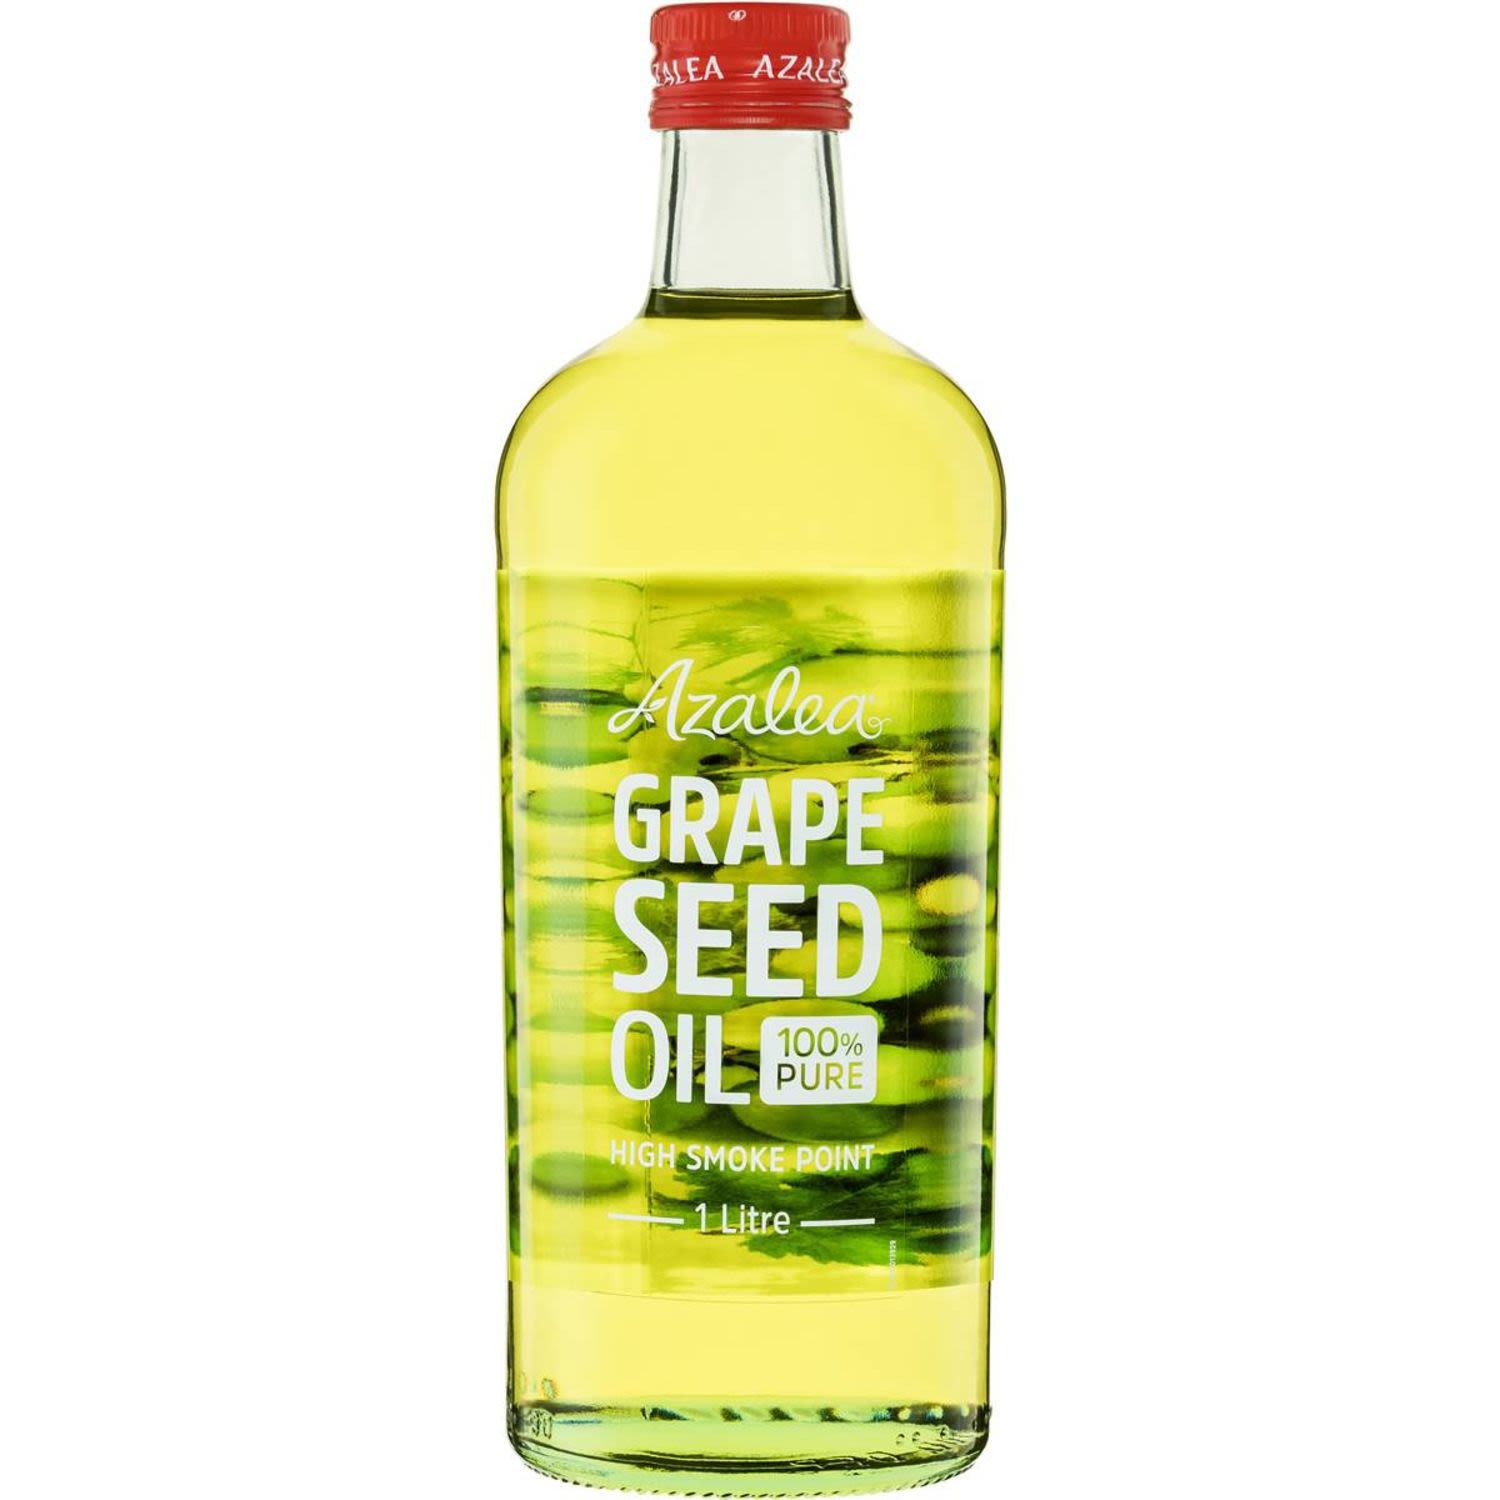 Azalea Grape Seed Oil, 1 Litre